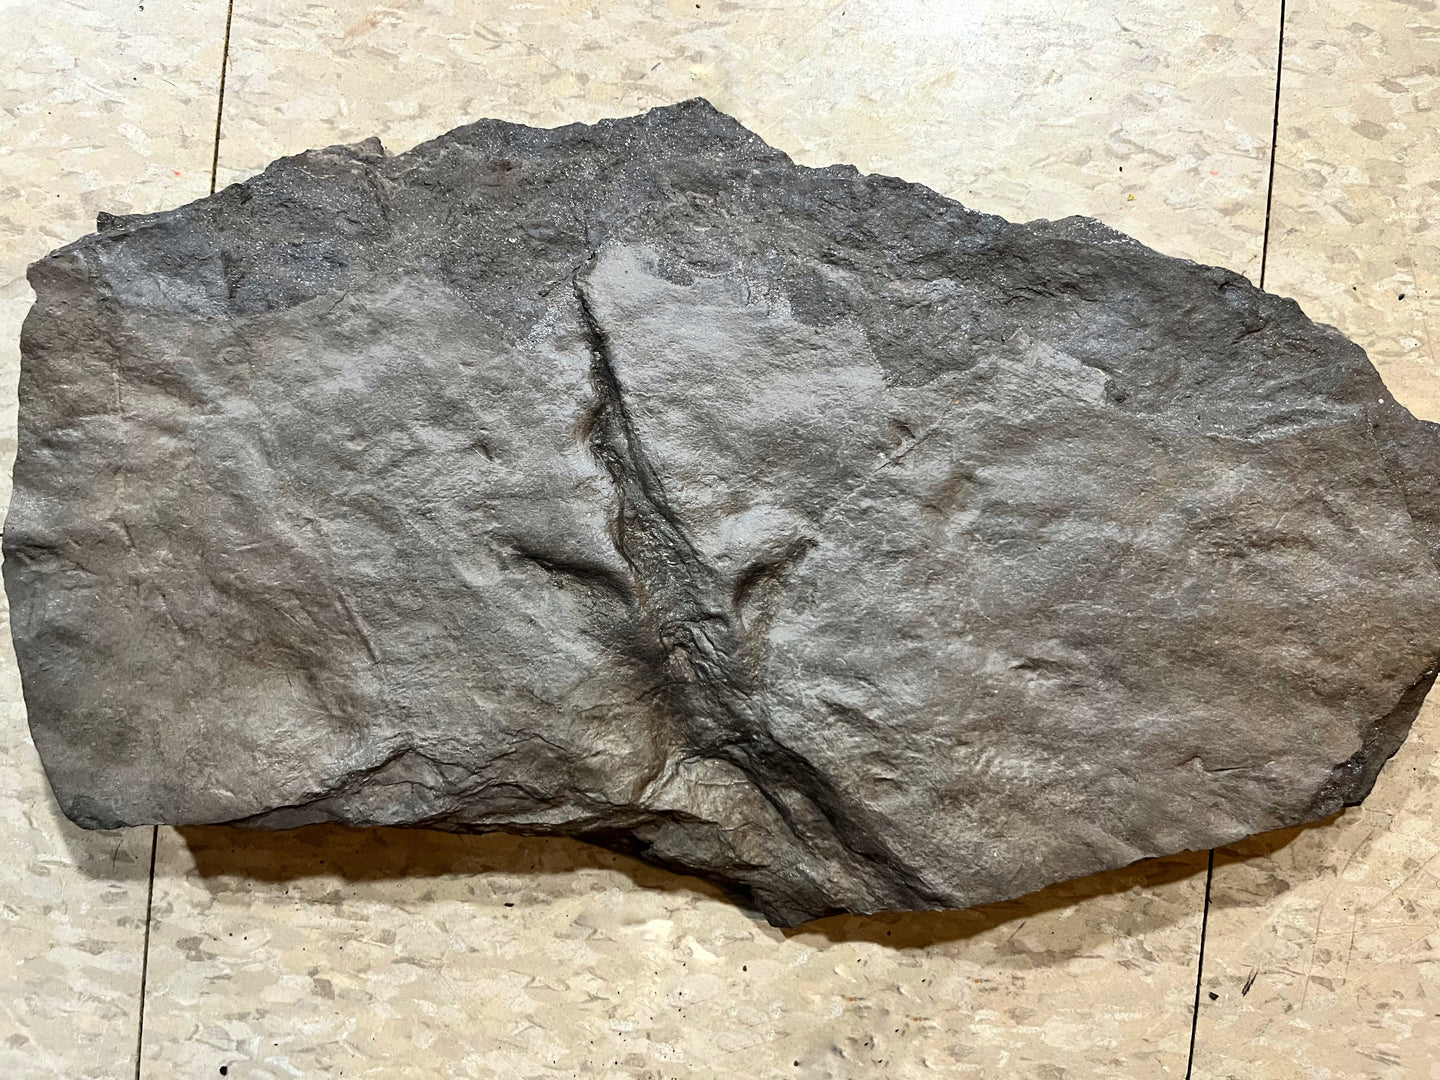 Impressive Small Fossil Dinosaur Footprint